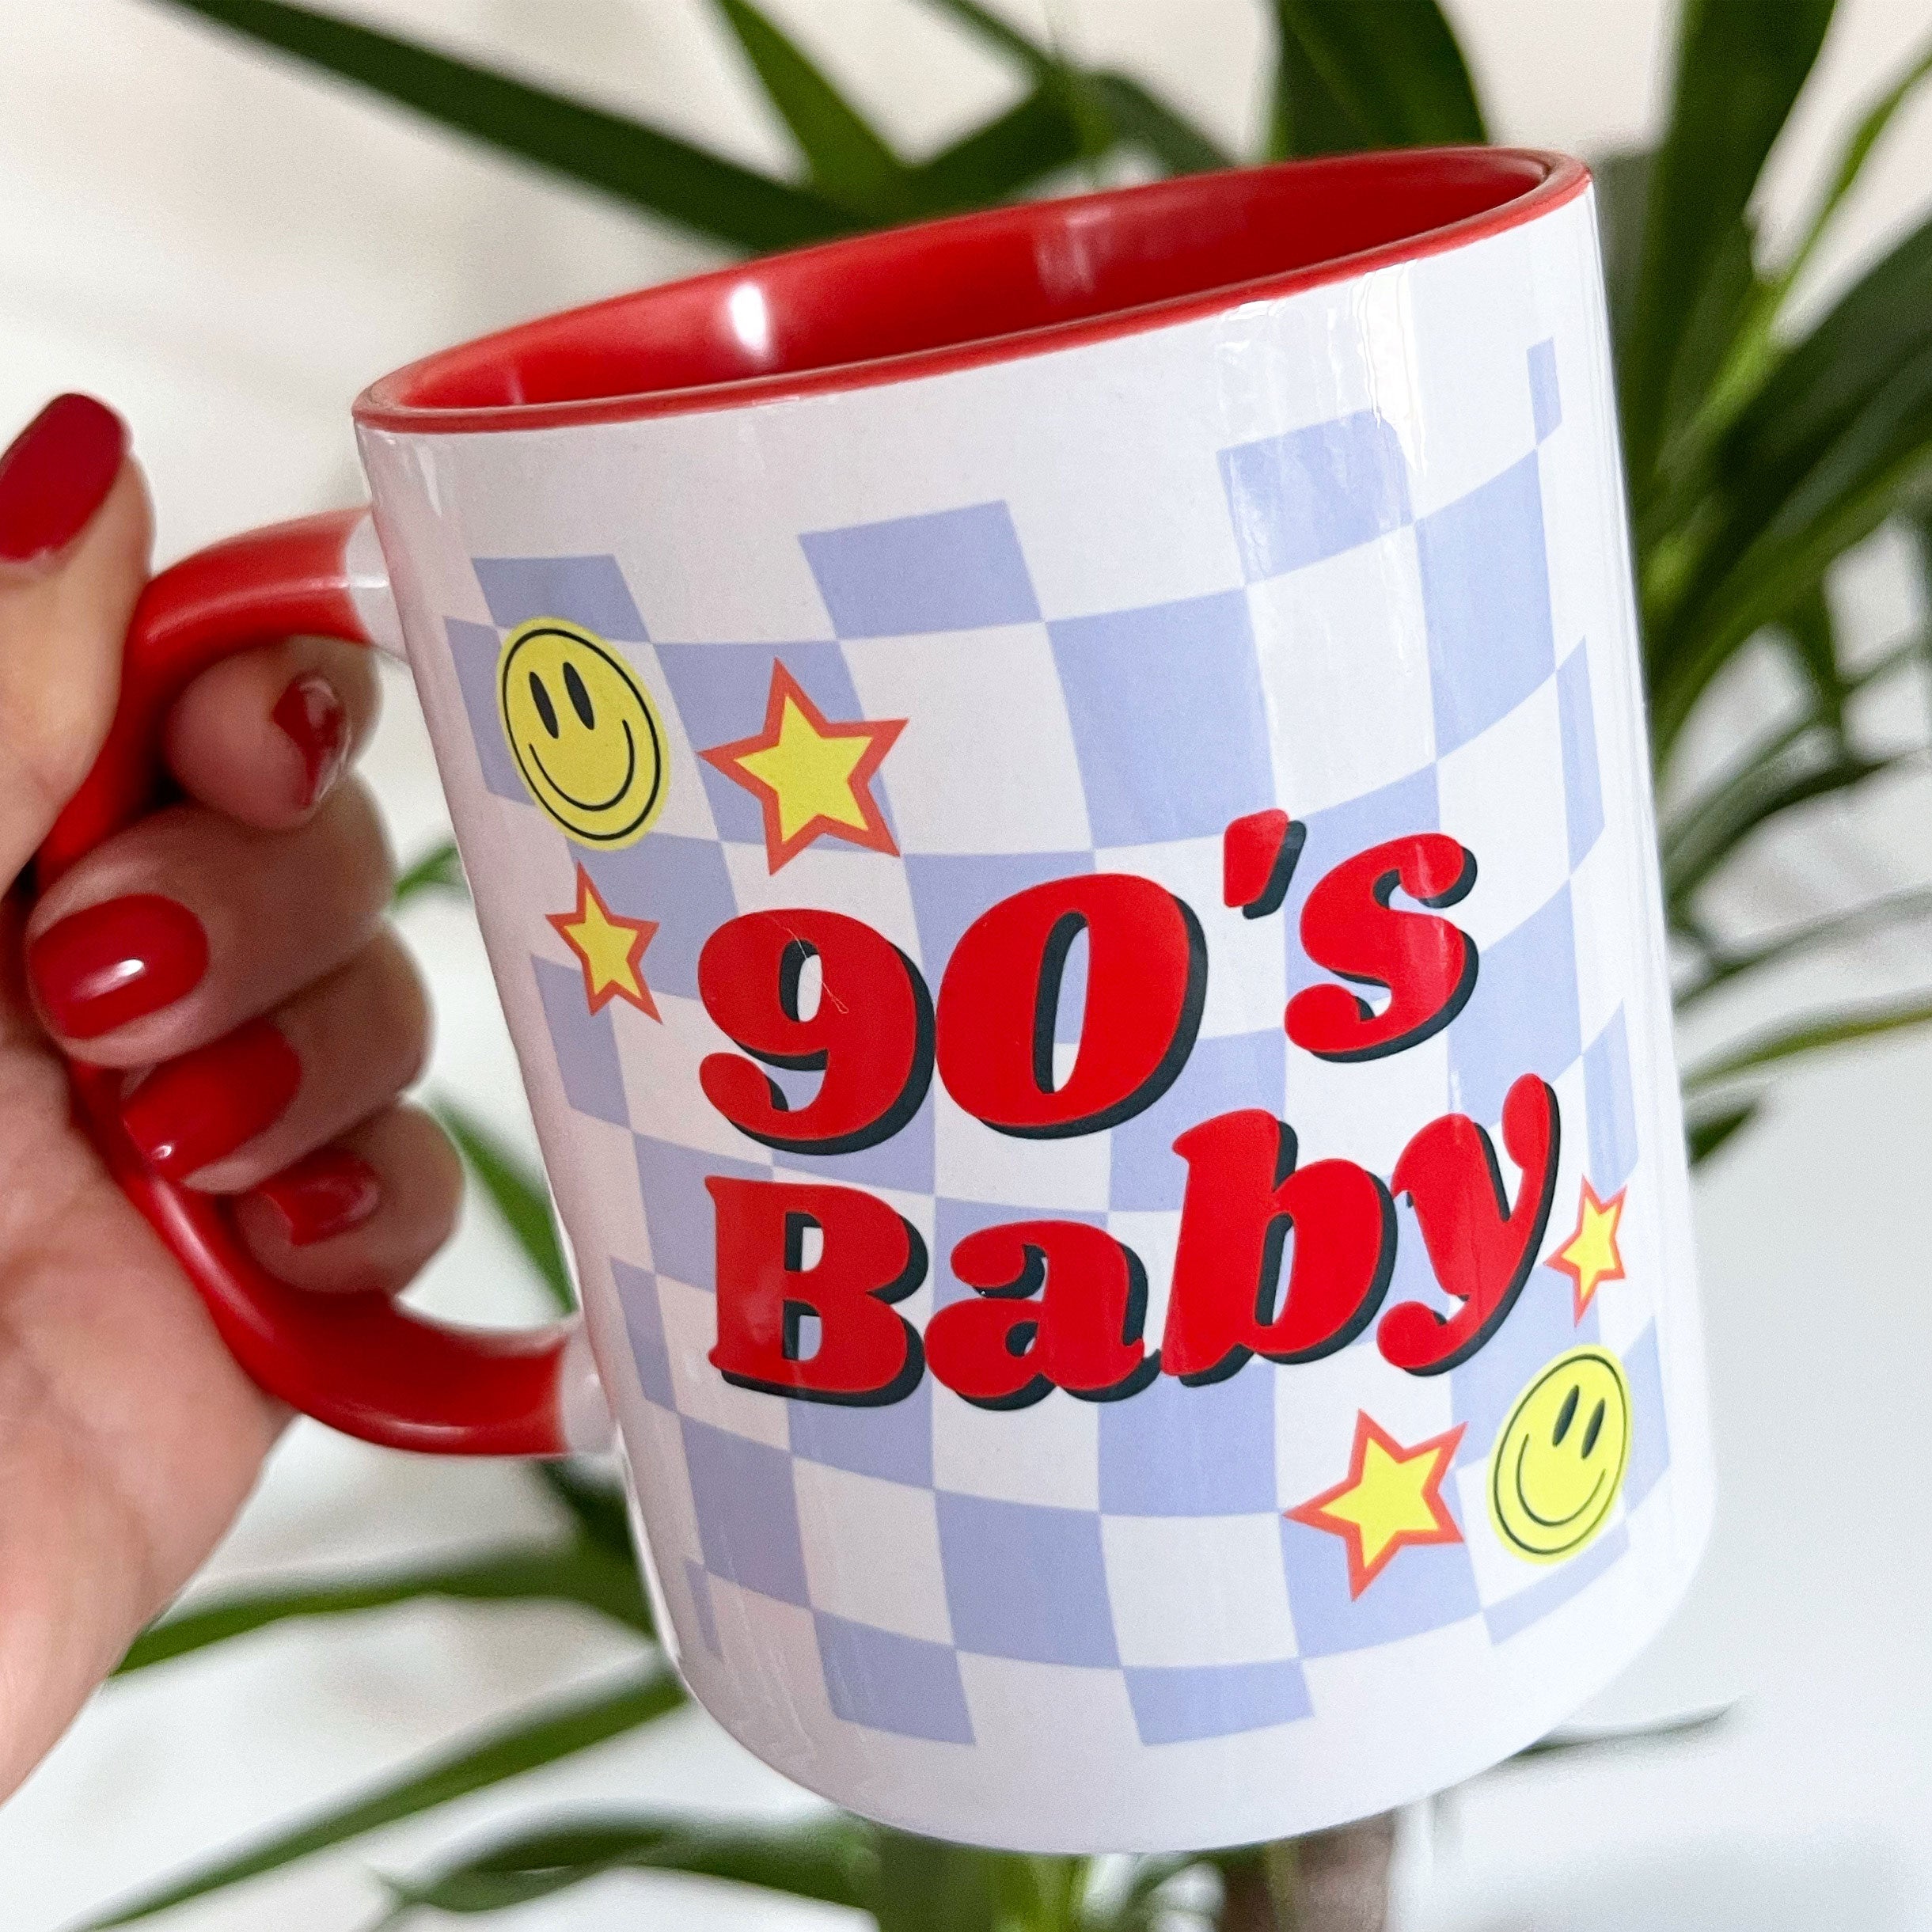 90's baby decade Birthday Mug